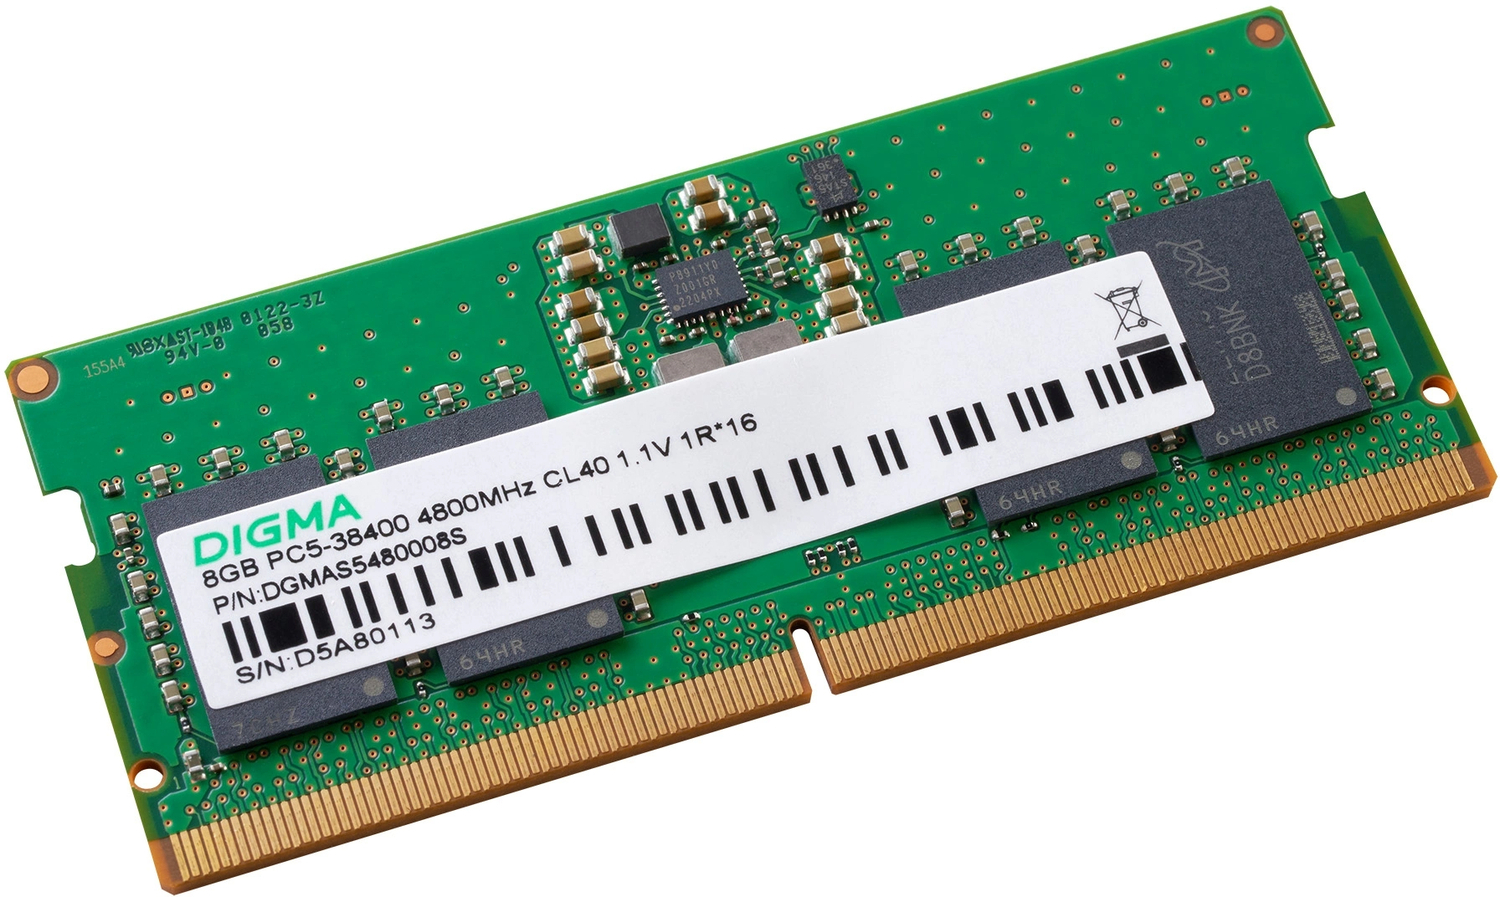   DIGMA DDR5  8GB, DGMAS5480008S, RTL